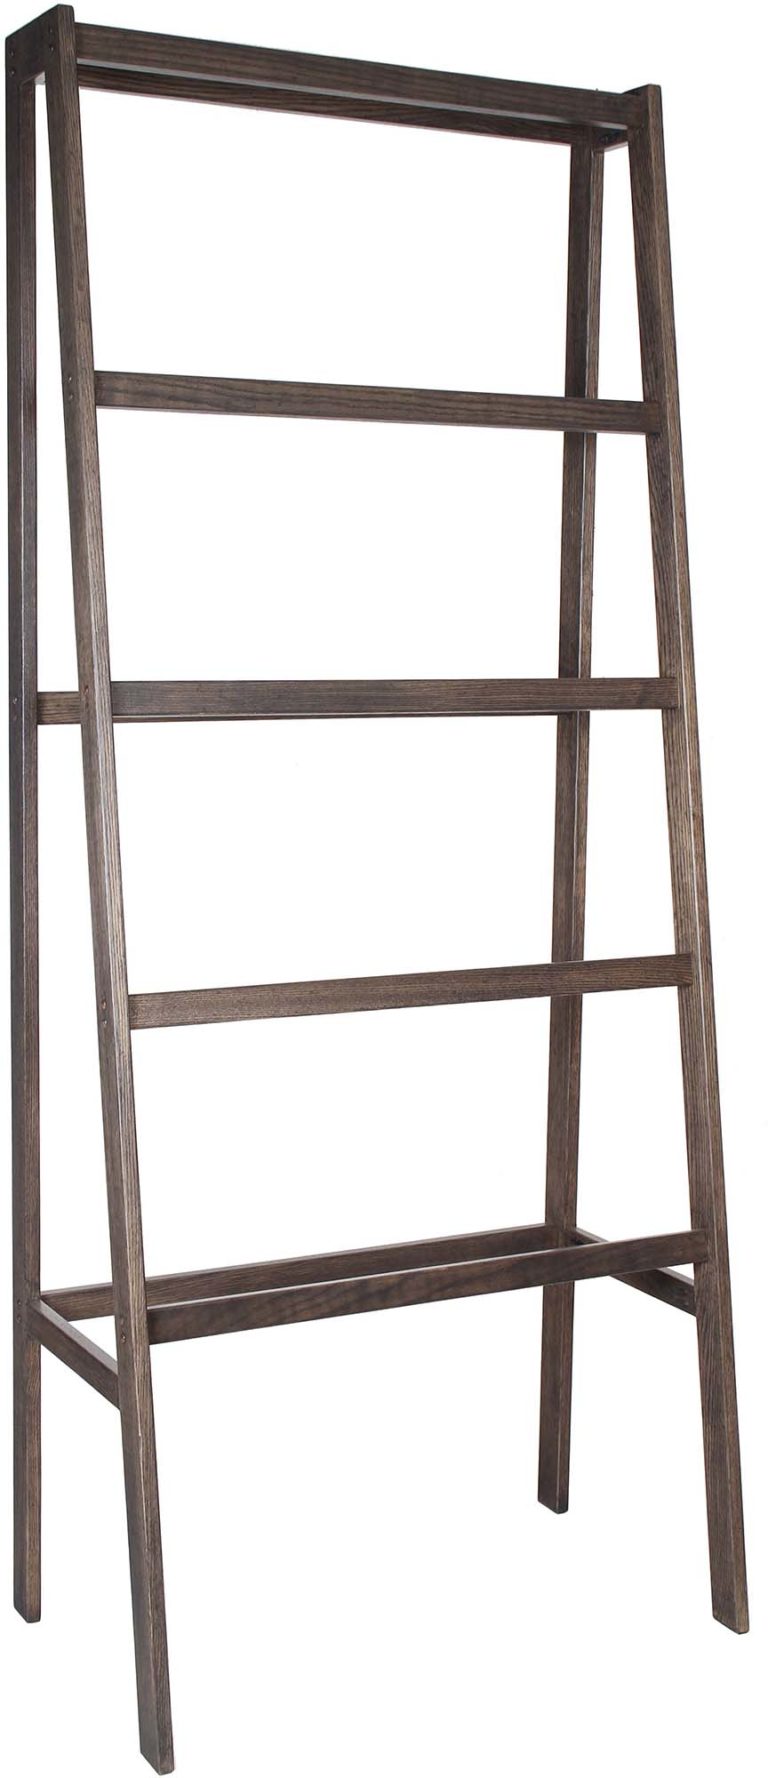 Ladder Quilt Rack